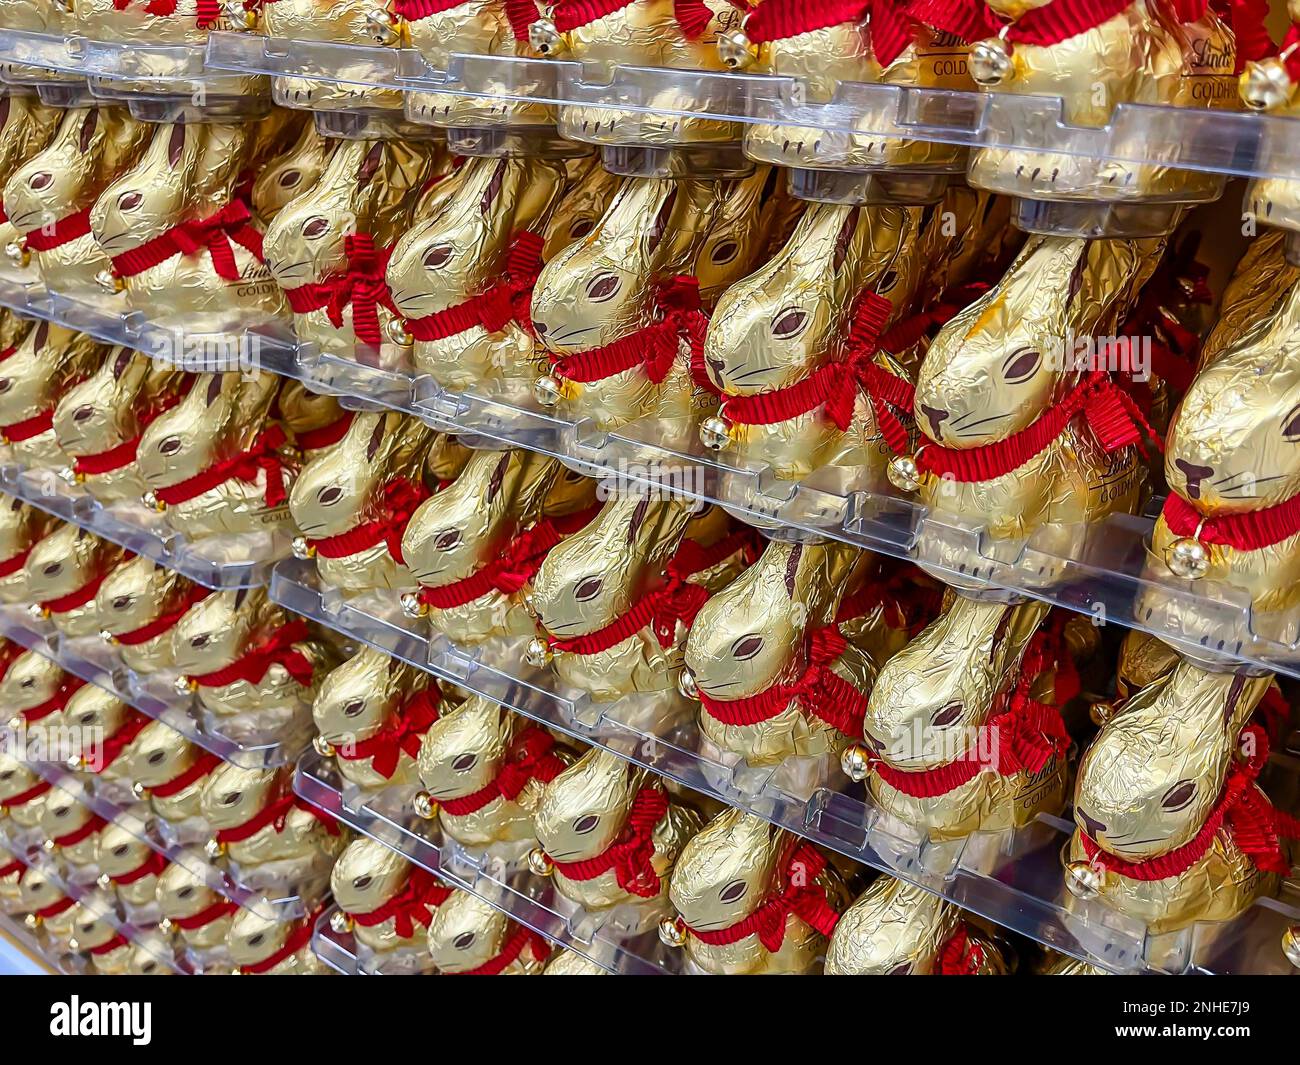 Lindt brand Easter bunnies, chocolate gold bunnies, supermarket shelf, Stuttgart, Baden-Wuerttemberg, Germany Stock Photo